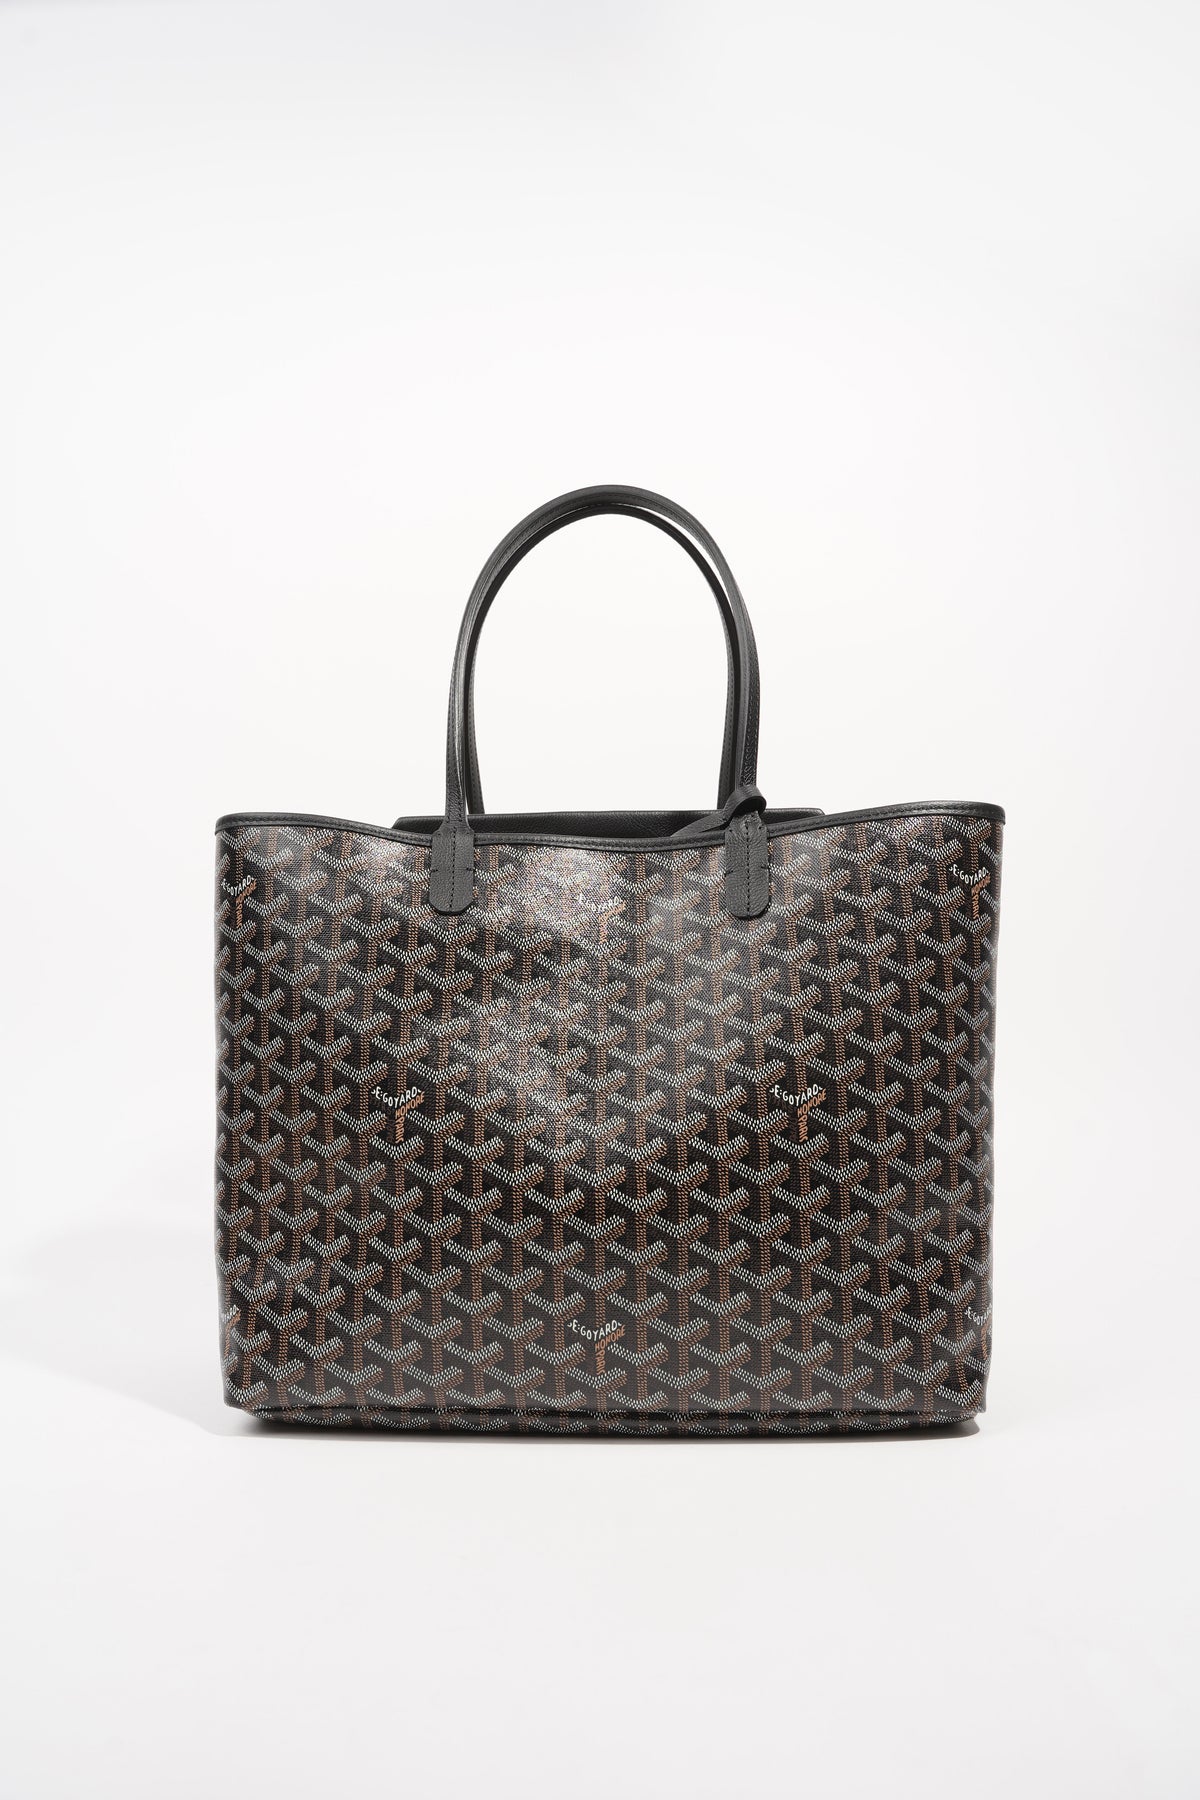 Goyard tote Grey, Women's Fashion, Bags & Wallets, Tote Bags on